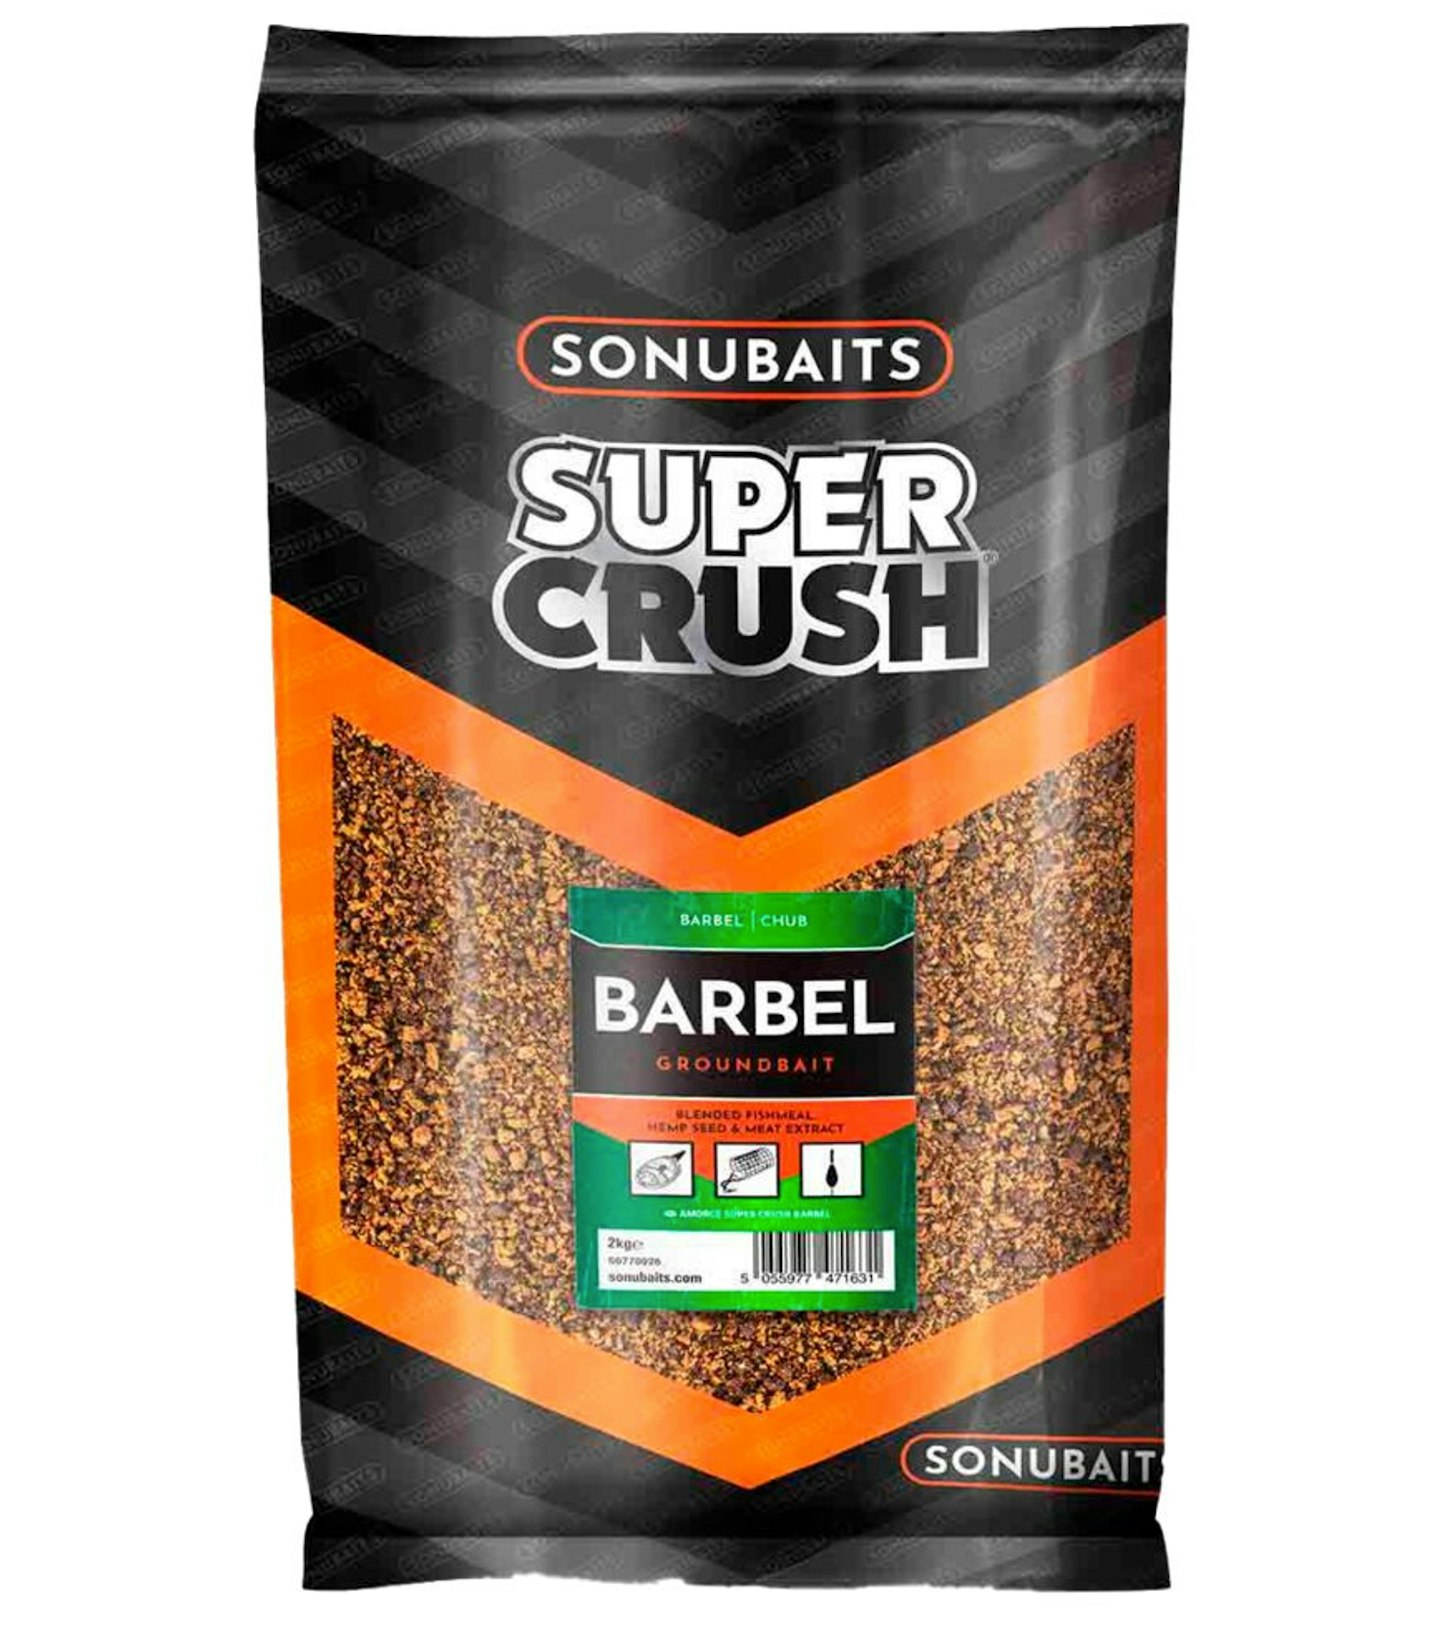 Sonubaits Super Crush Barbel Groundbait